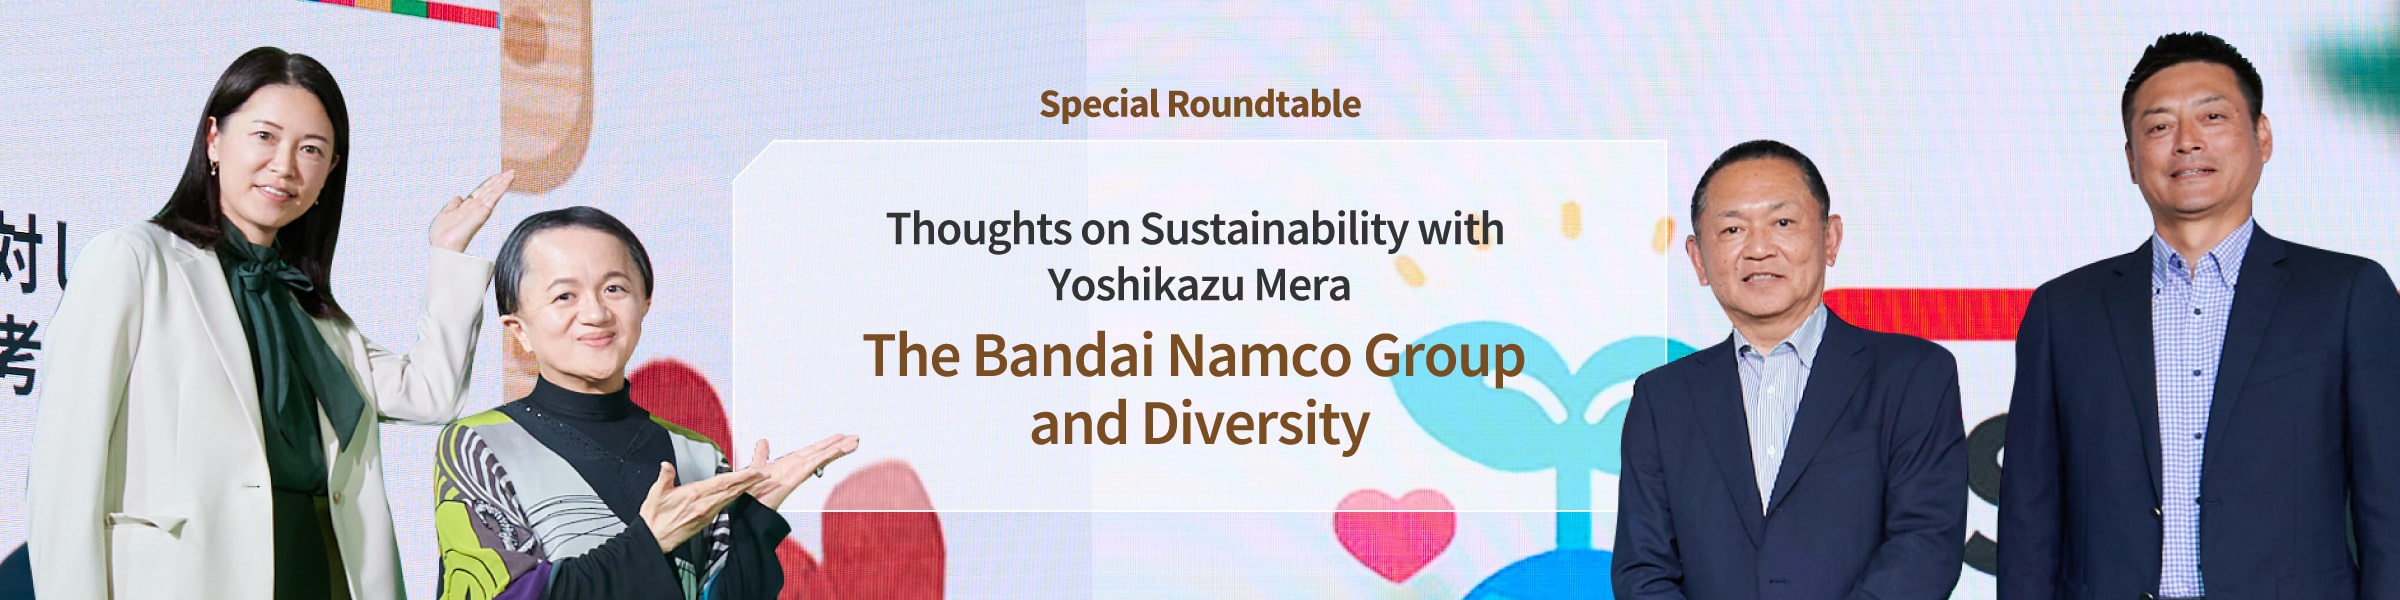 Special Roundtable: Thoughts on Sustainability with Yoshikazu Mera